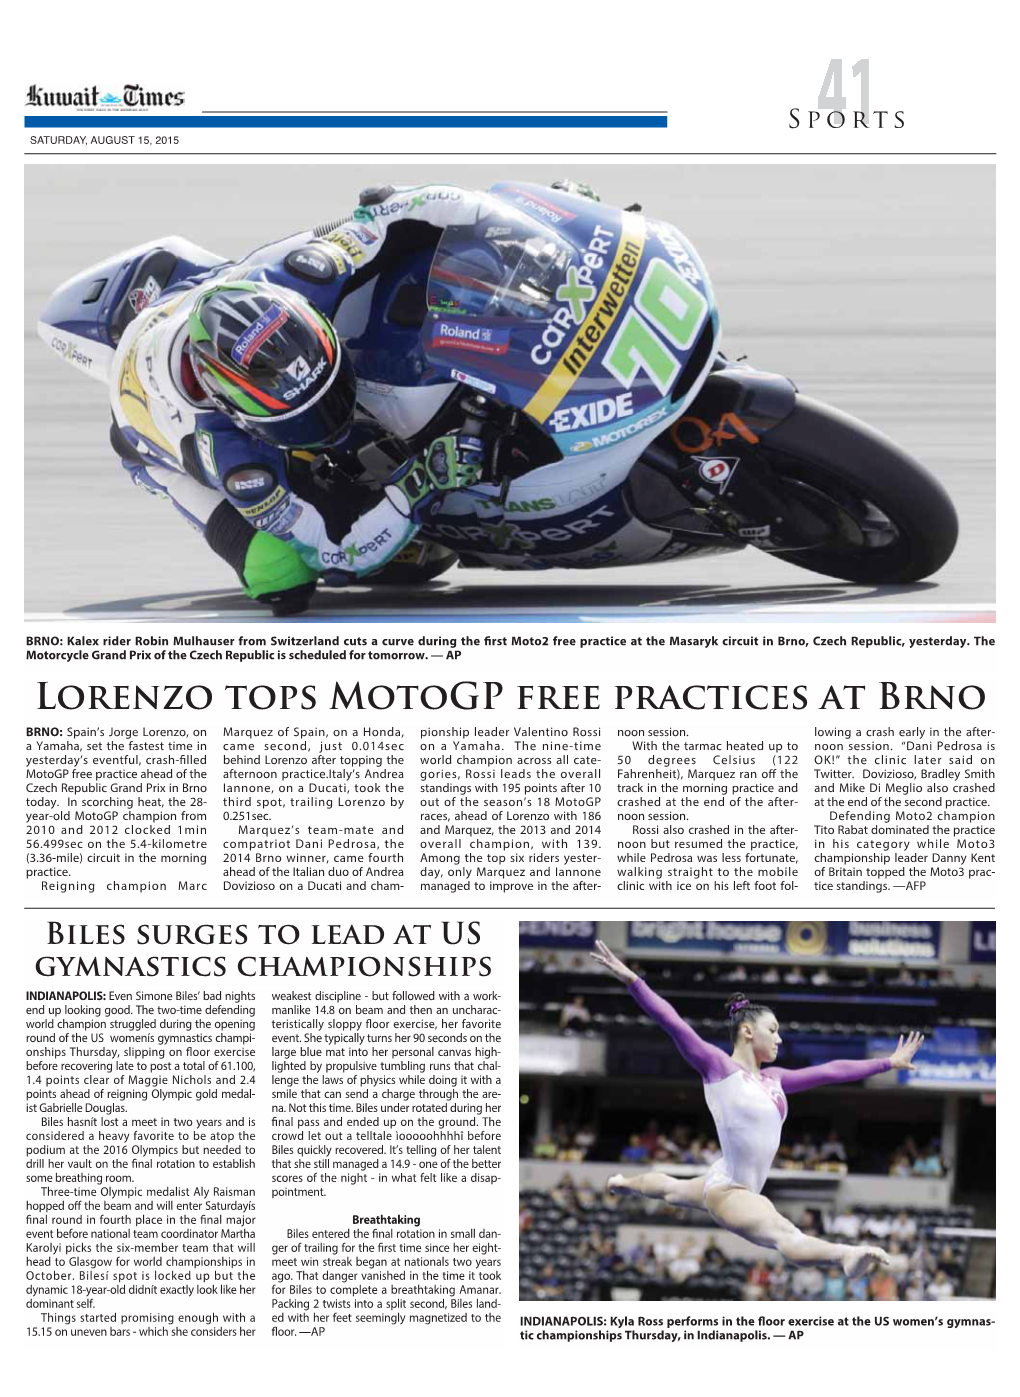 Lorenzo Tops Motogp Free Practices at Brno